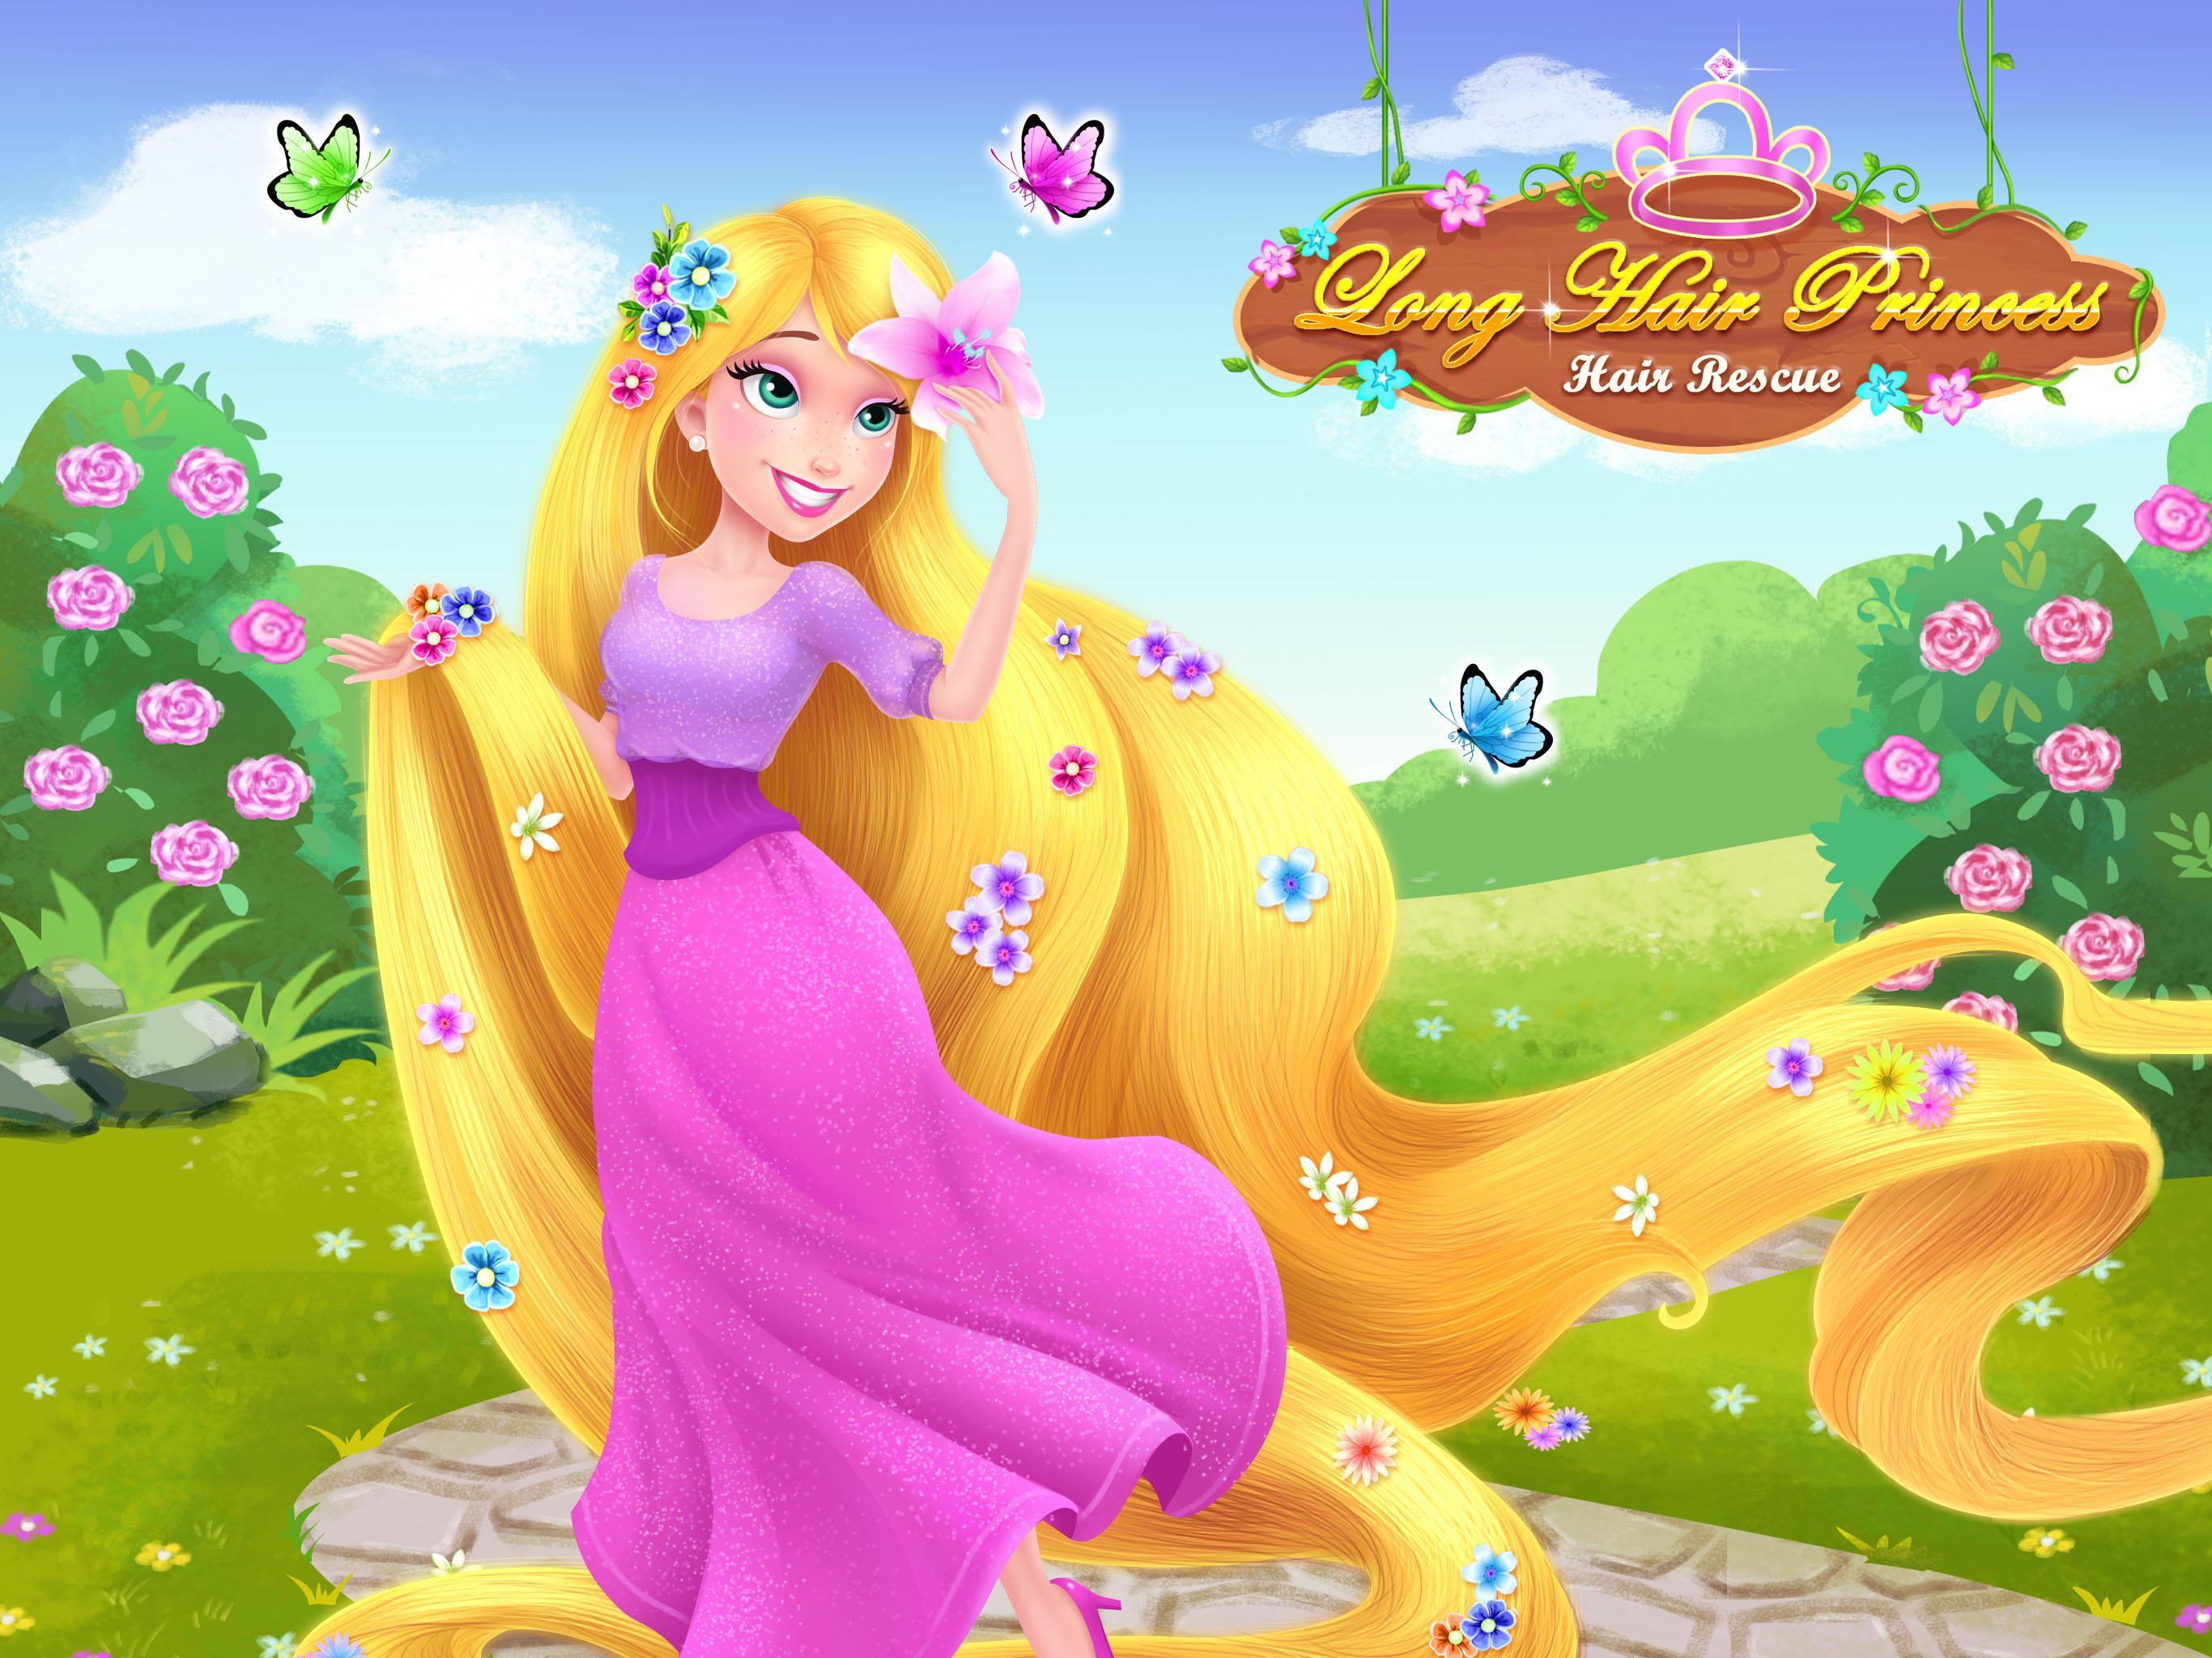 Screenshot 1 of Princesse aux cheveux longs - Prince Re 